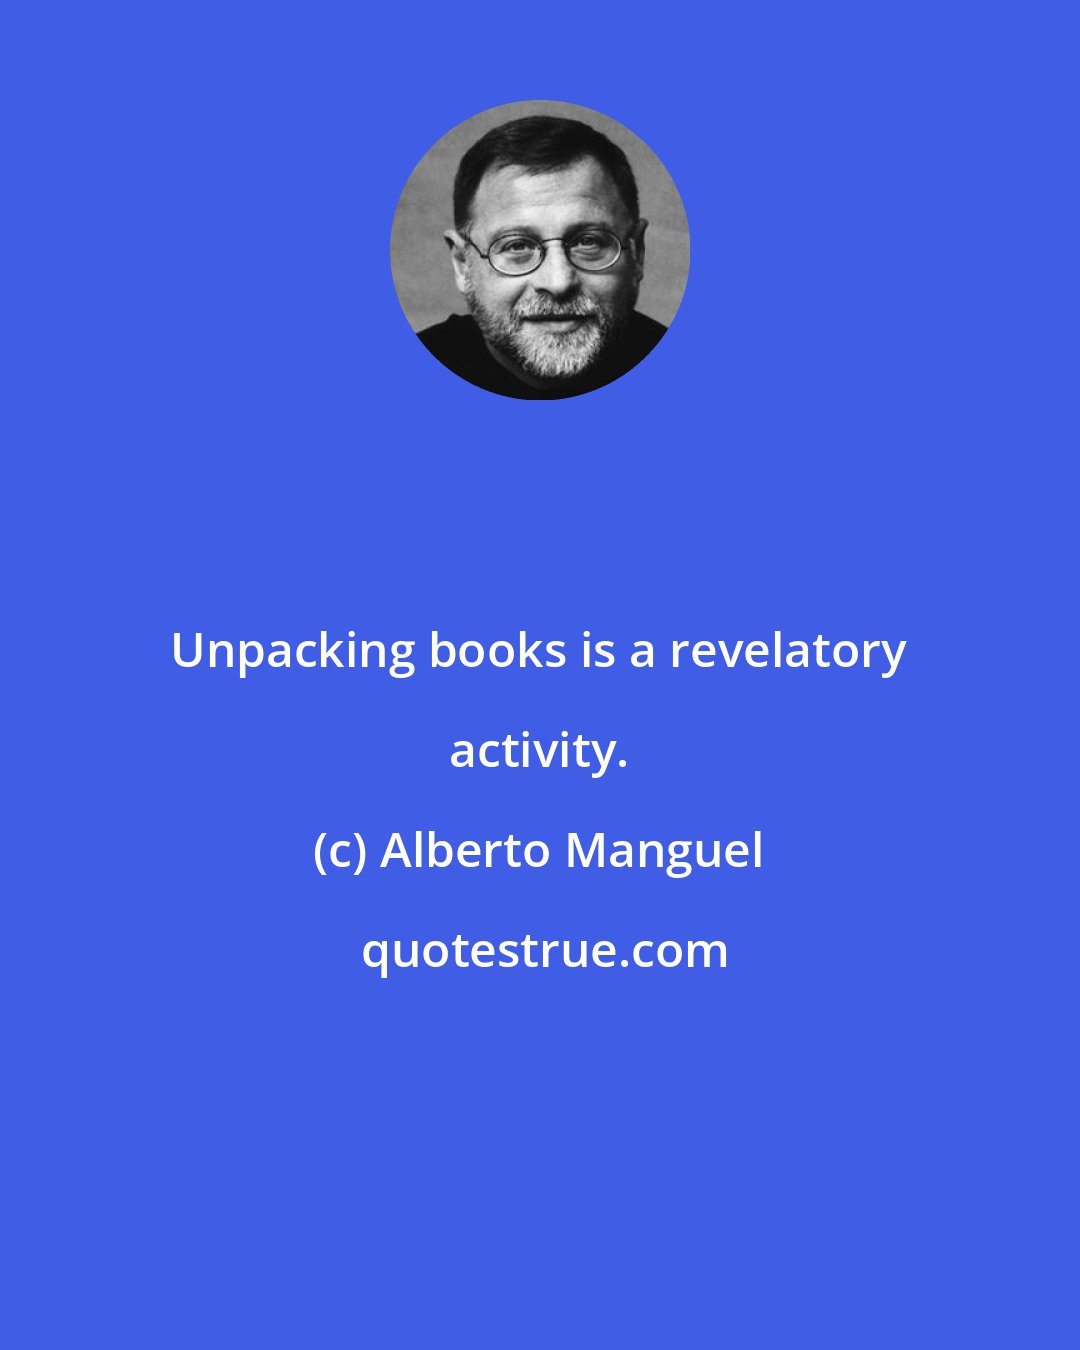 Alberto Manguel: Unpacking books is a revelatory activity.